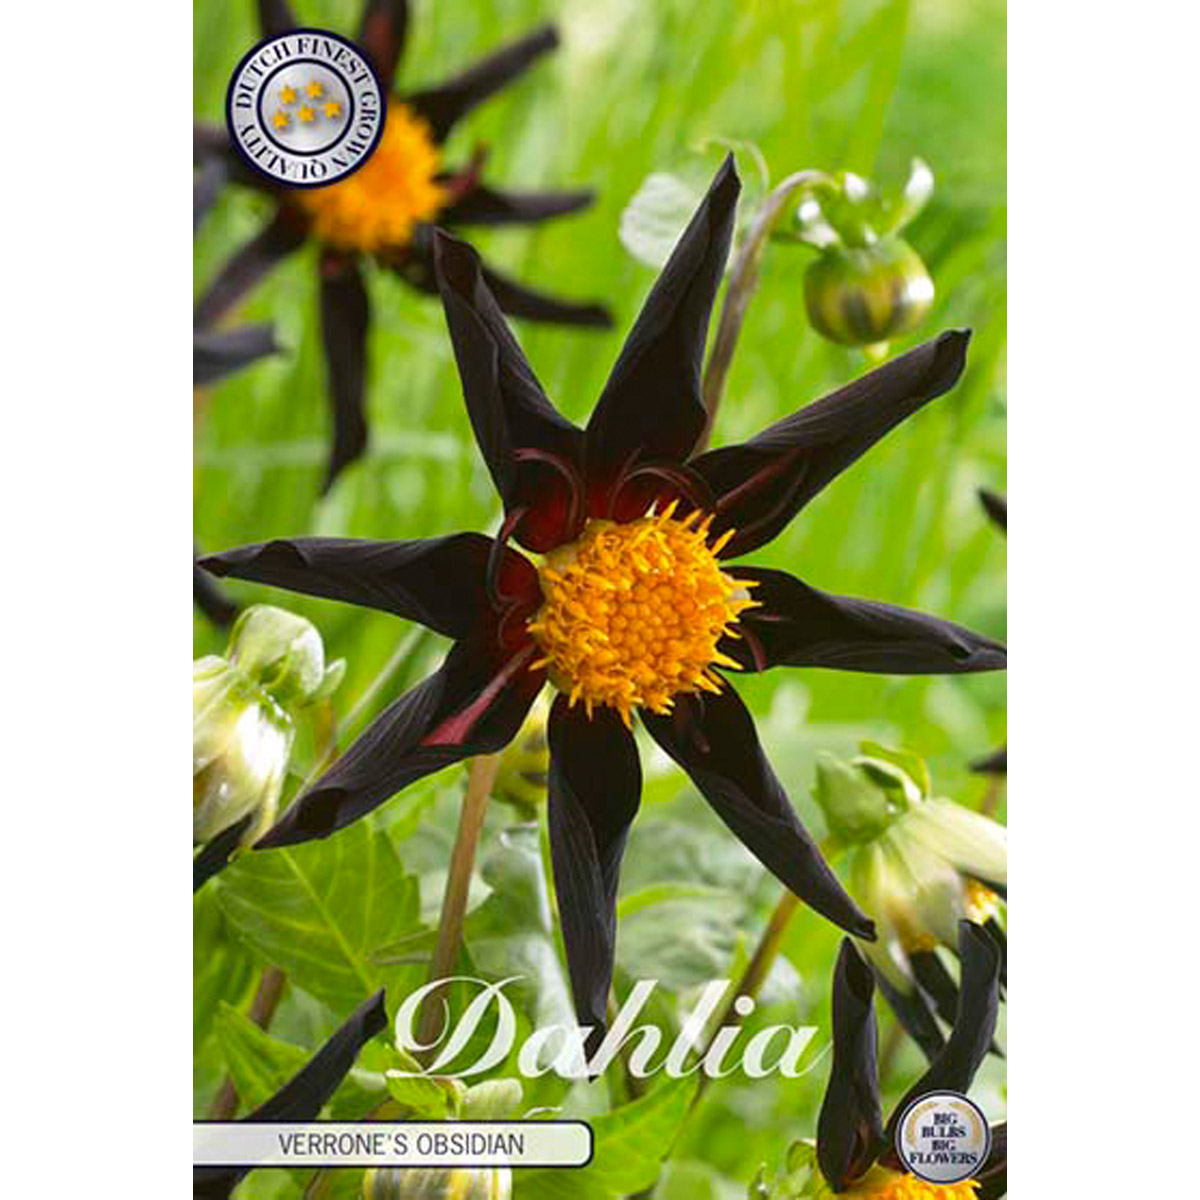 Orkidédahlia, Verrone's Obsidian 1 st